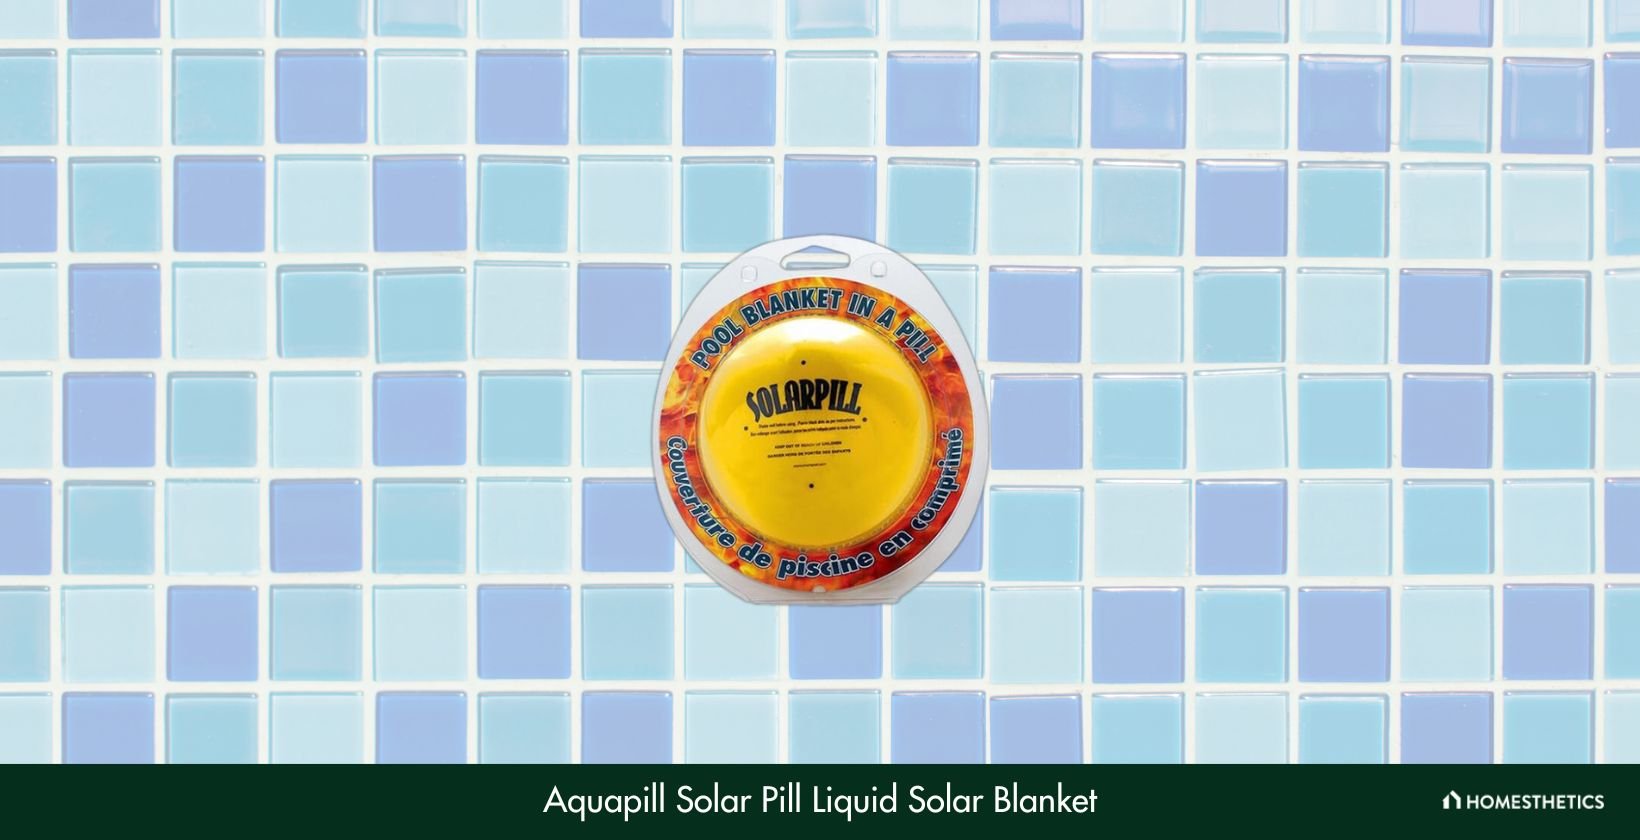 Aquapill Solar Pill Liquid Solar Blanket